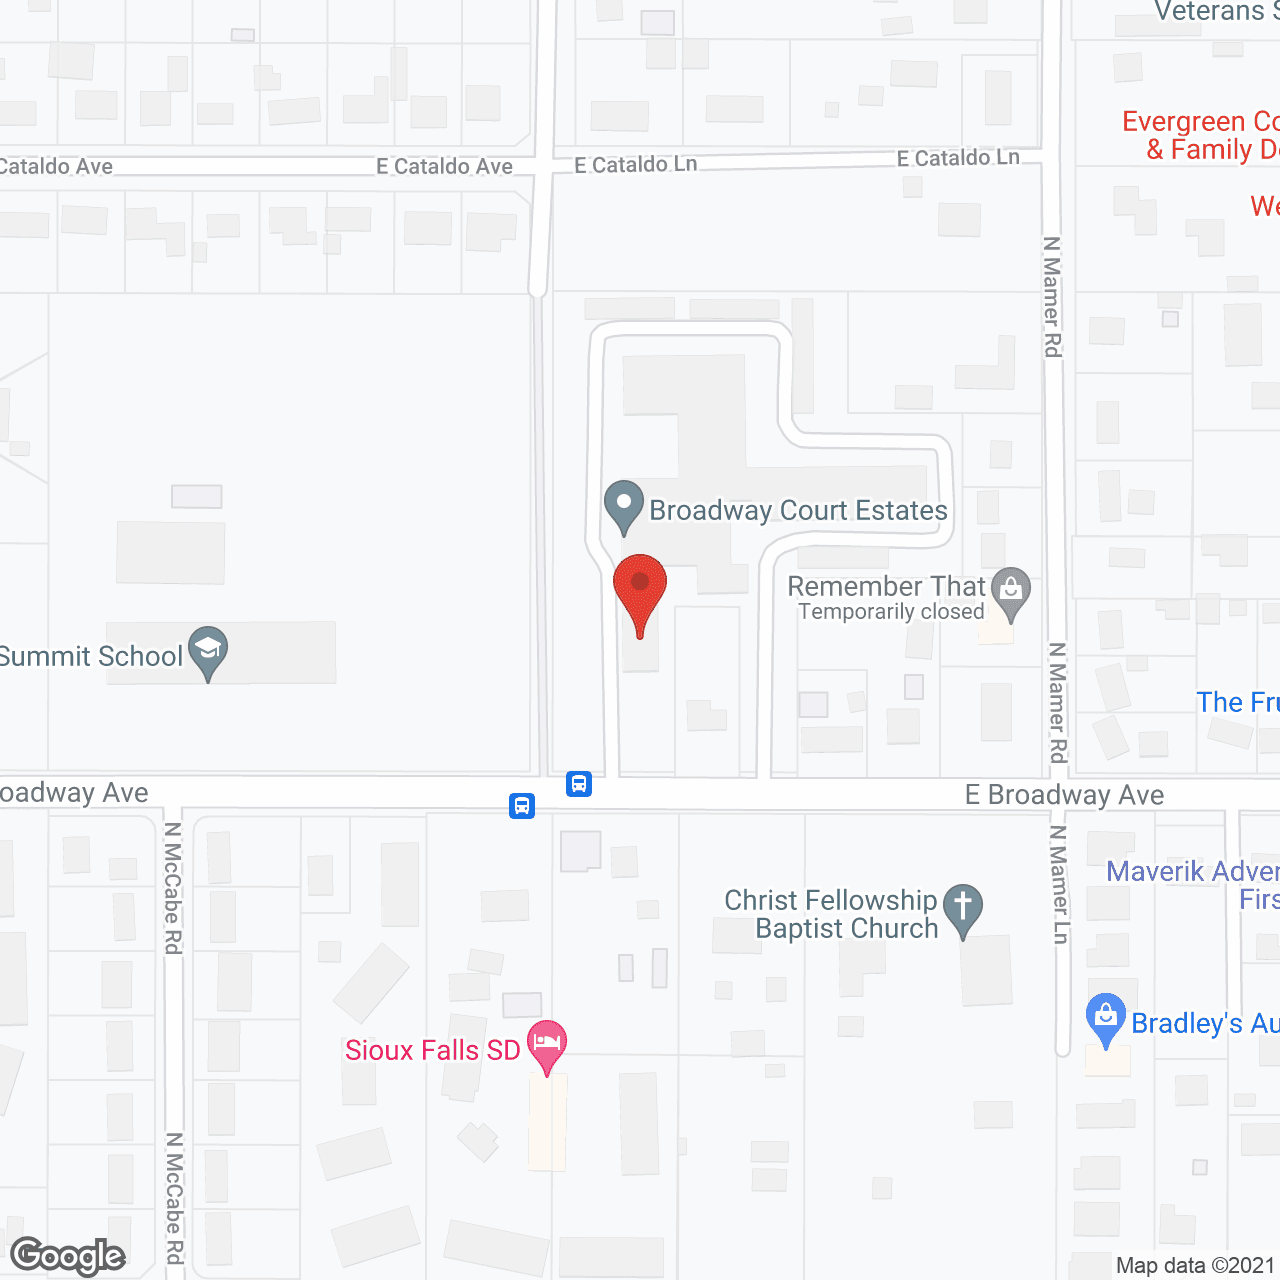 Broadway Court Estates in google map